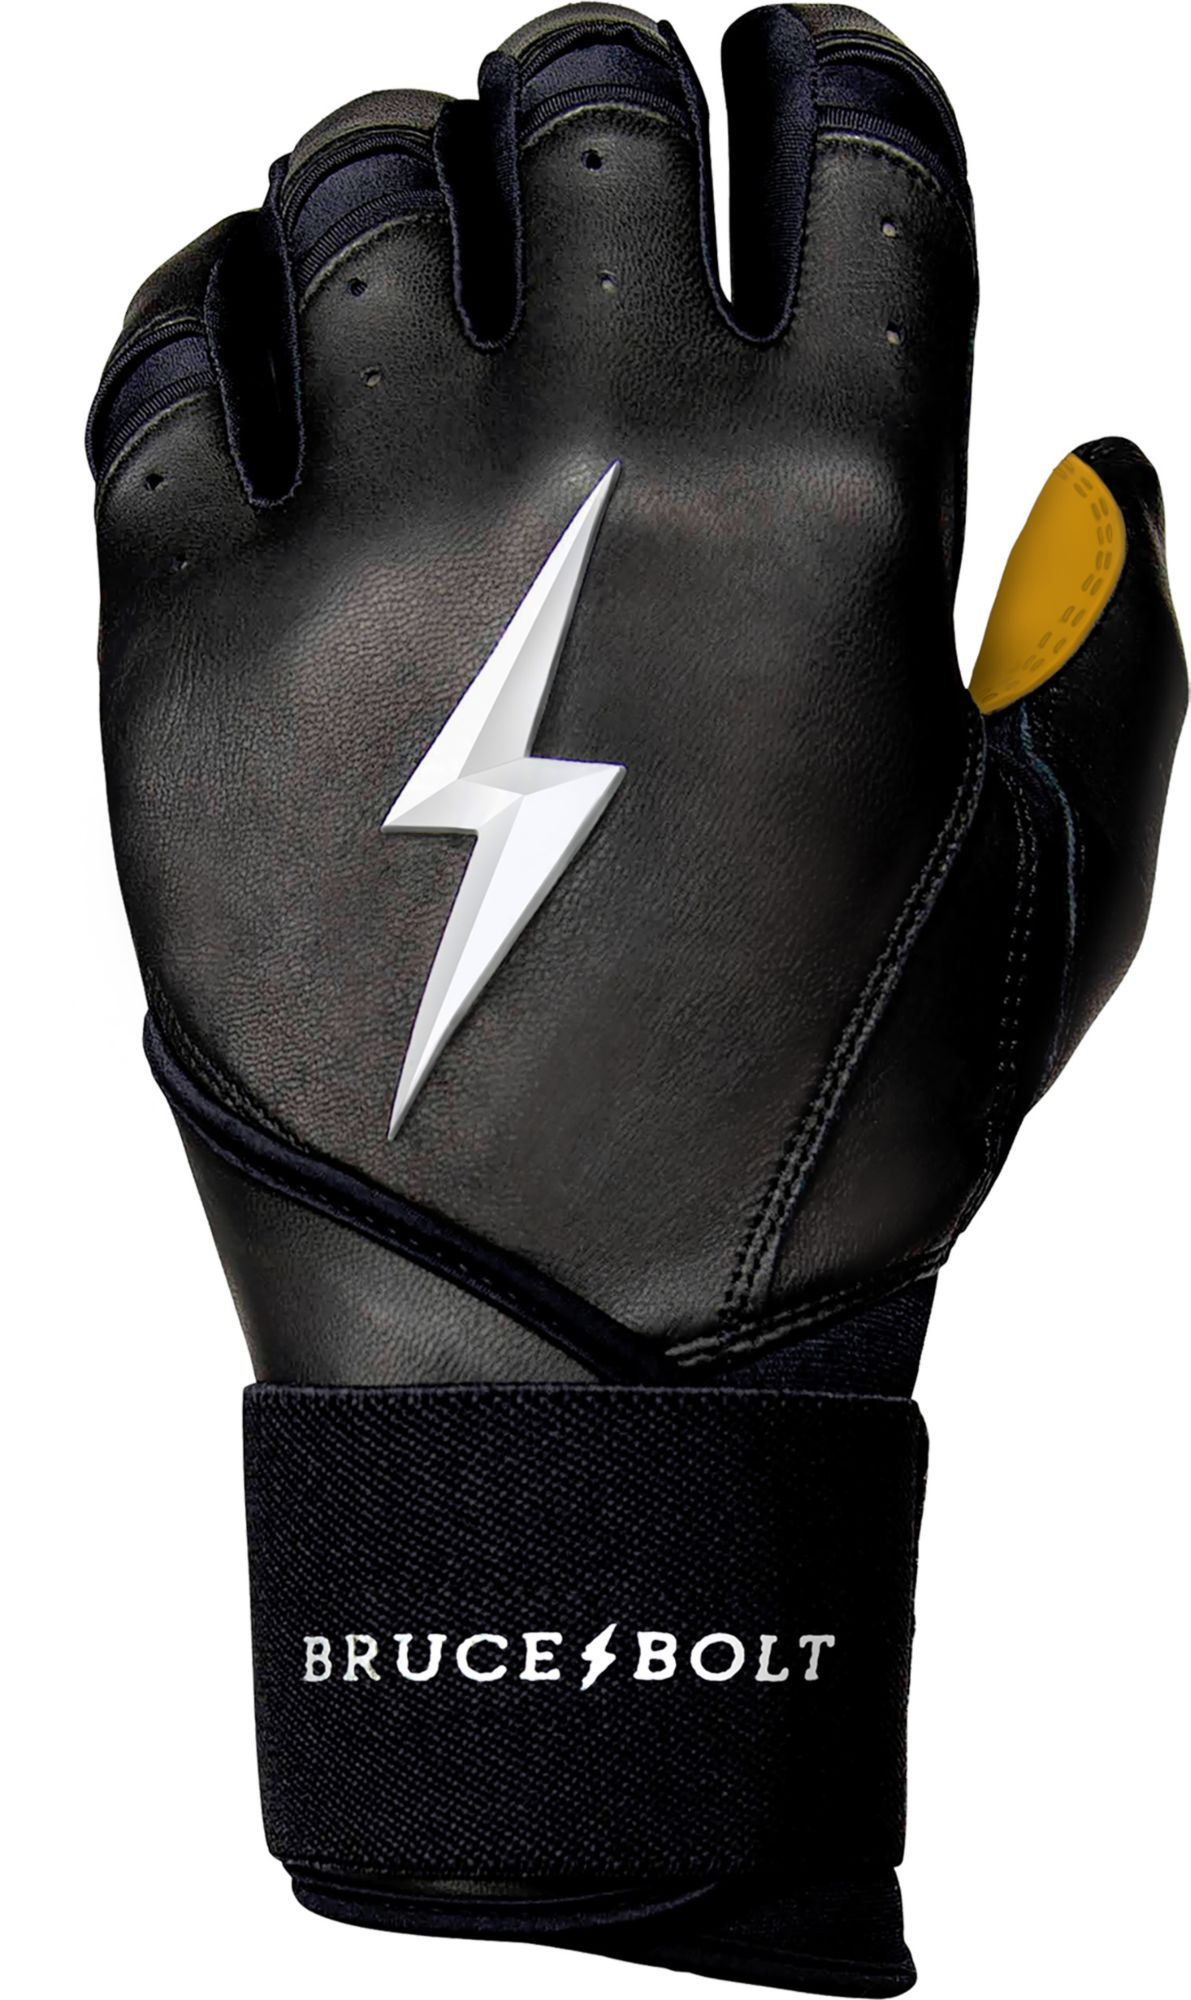 Bruce Bolt Adult Long Cuff Gold Palm Batting Gloves